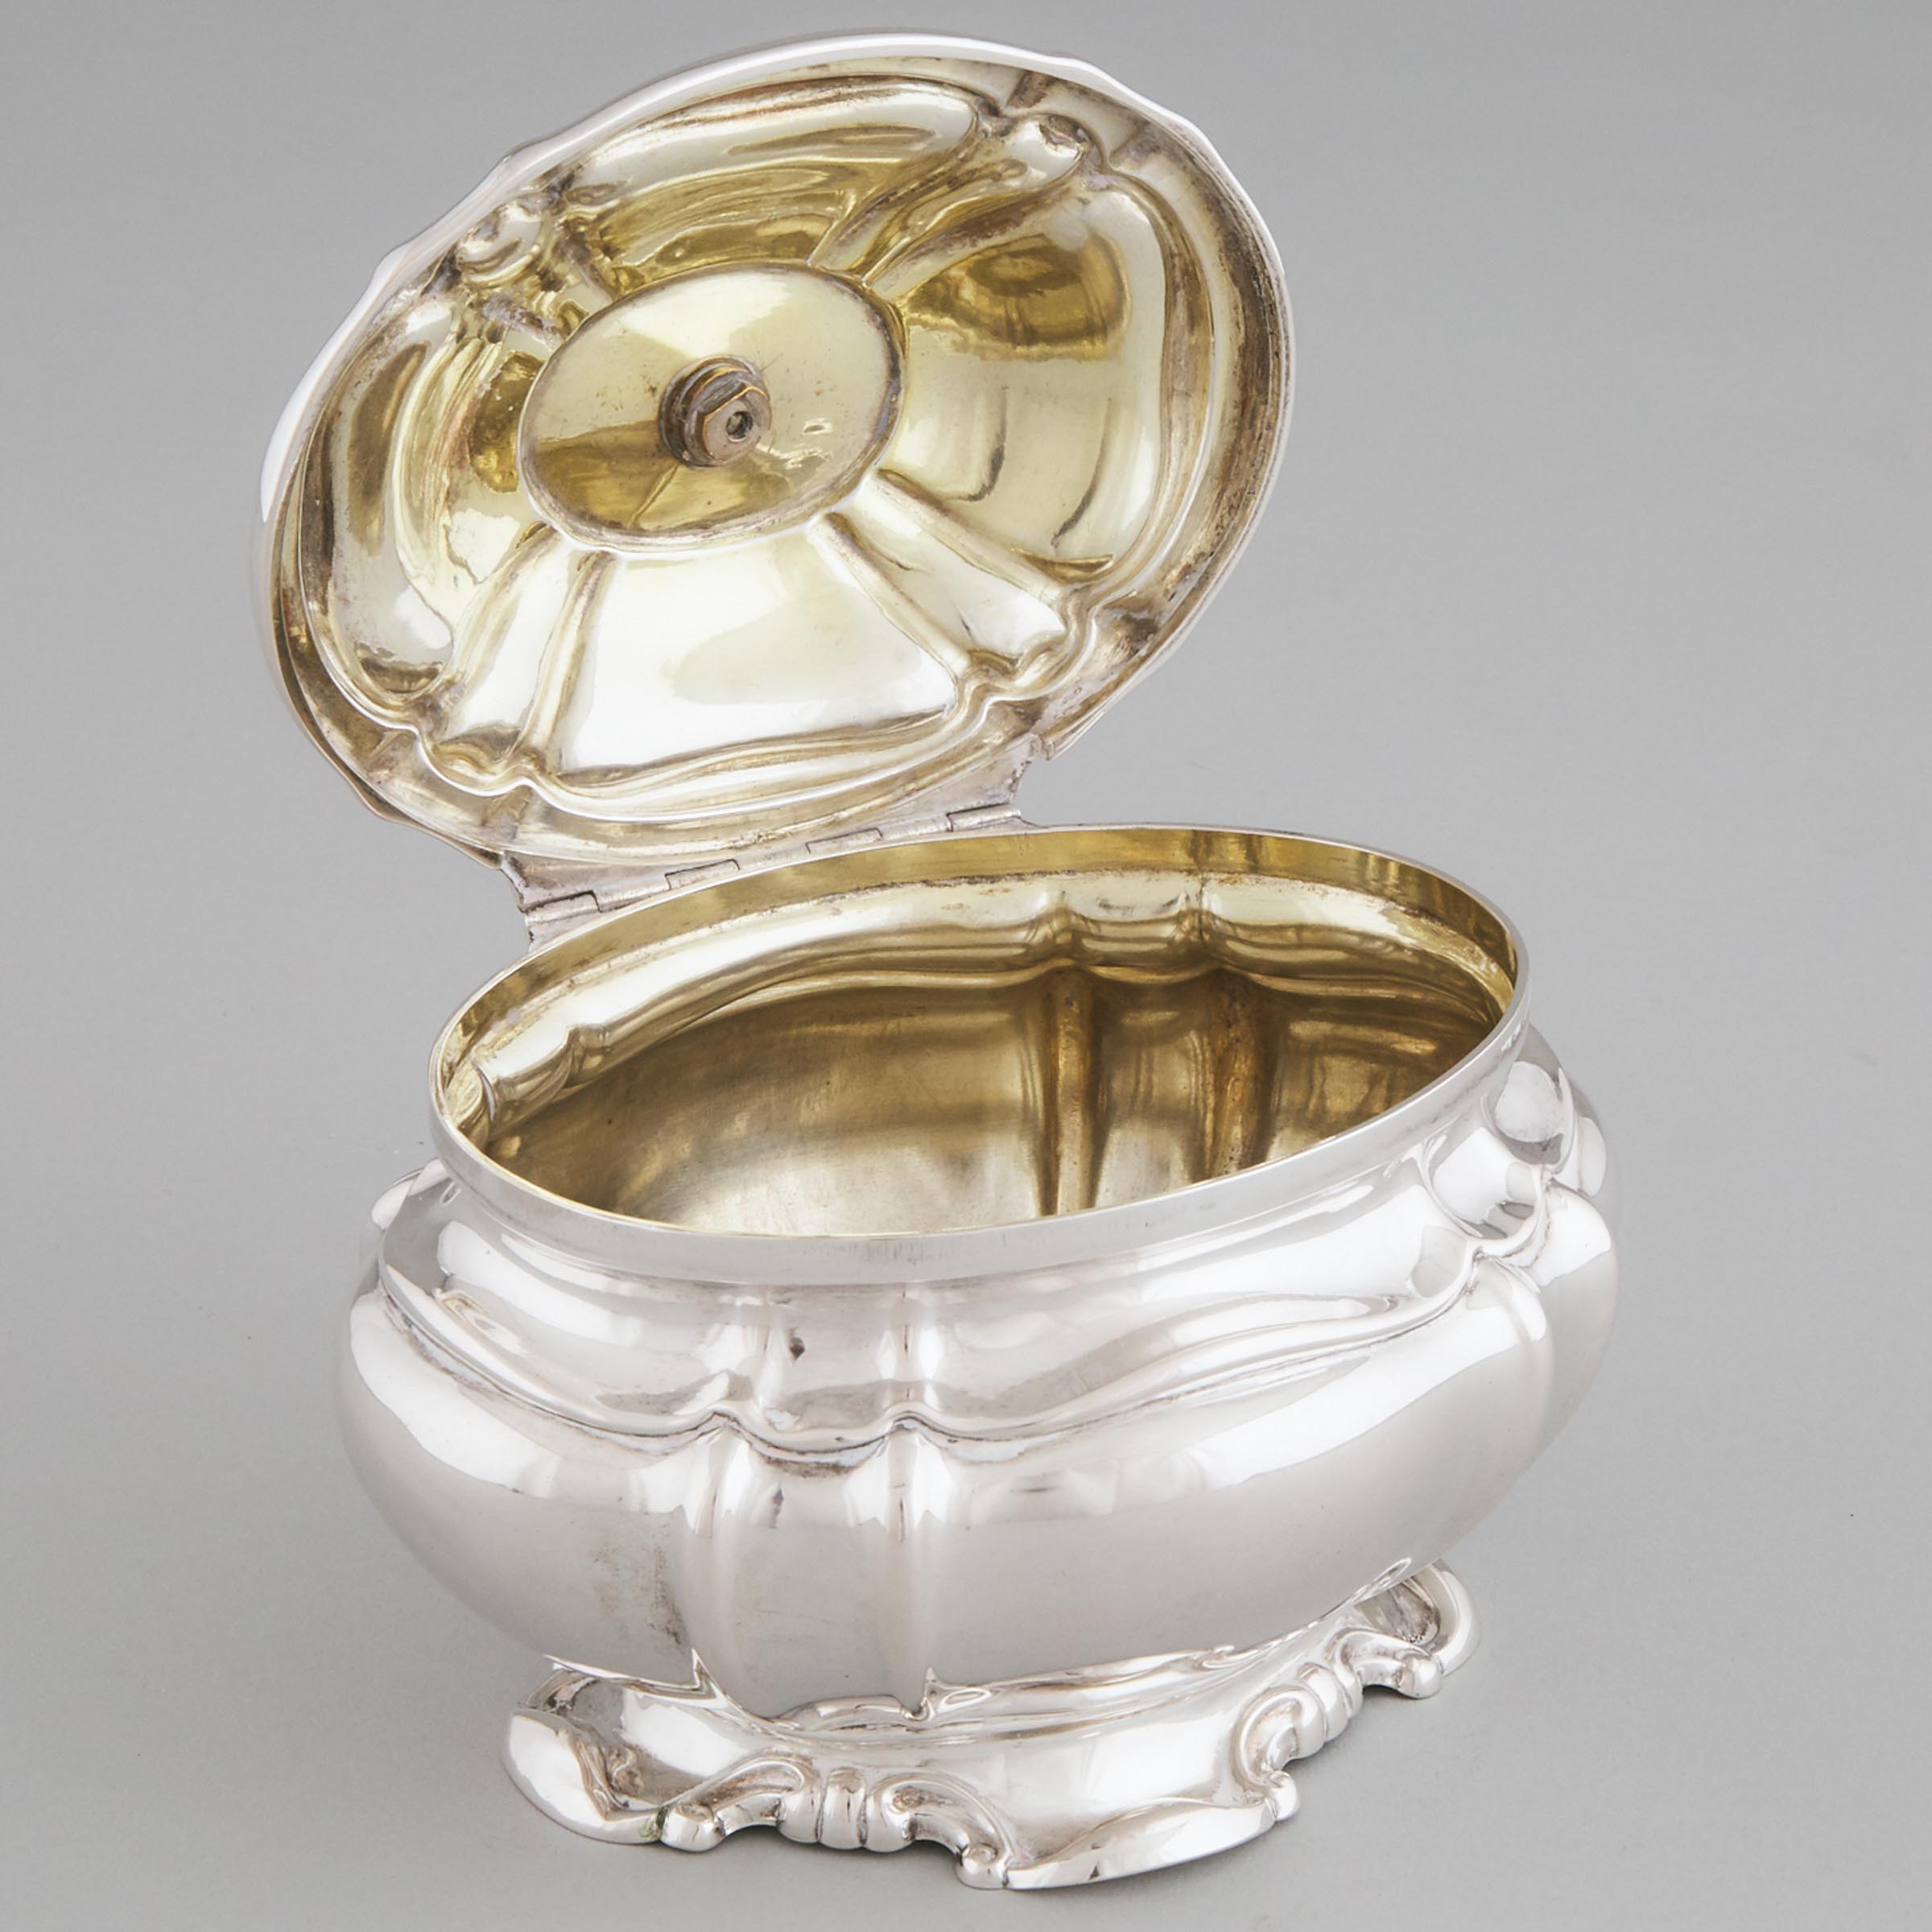 German Silver Shaped Oval Sugar Box, 19th century